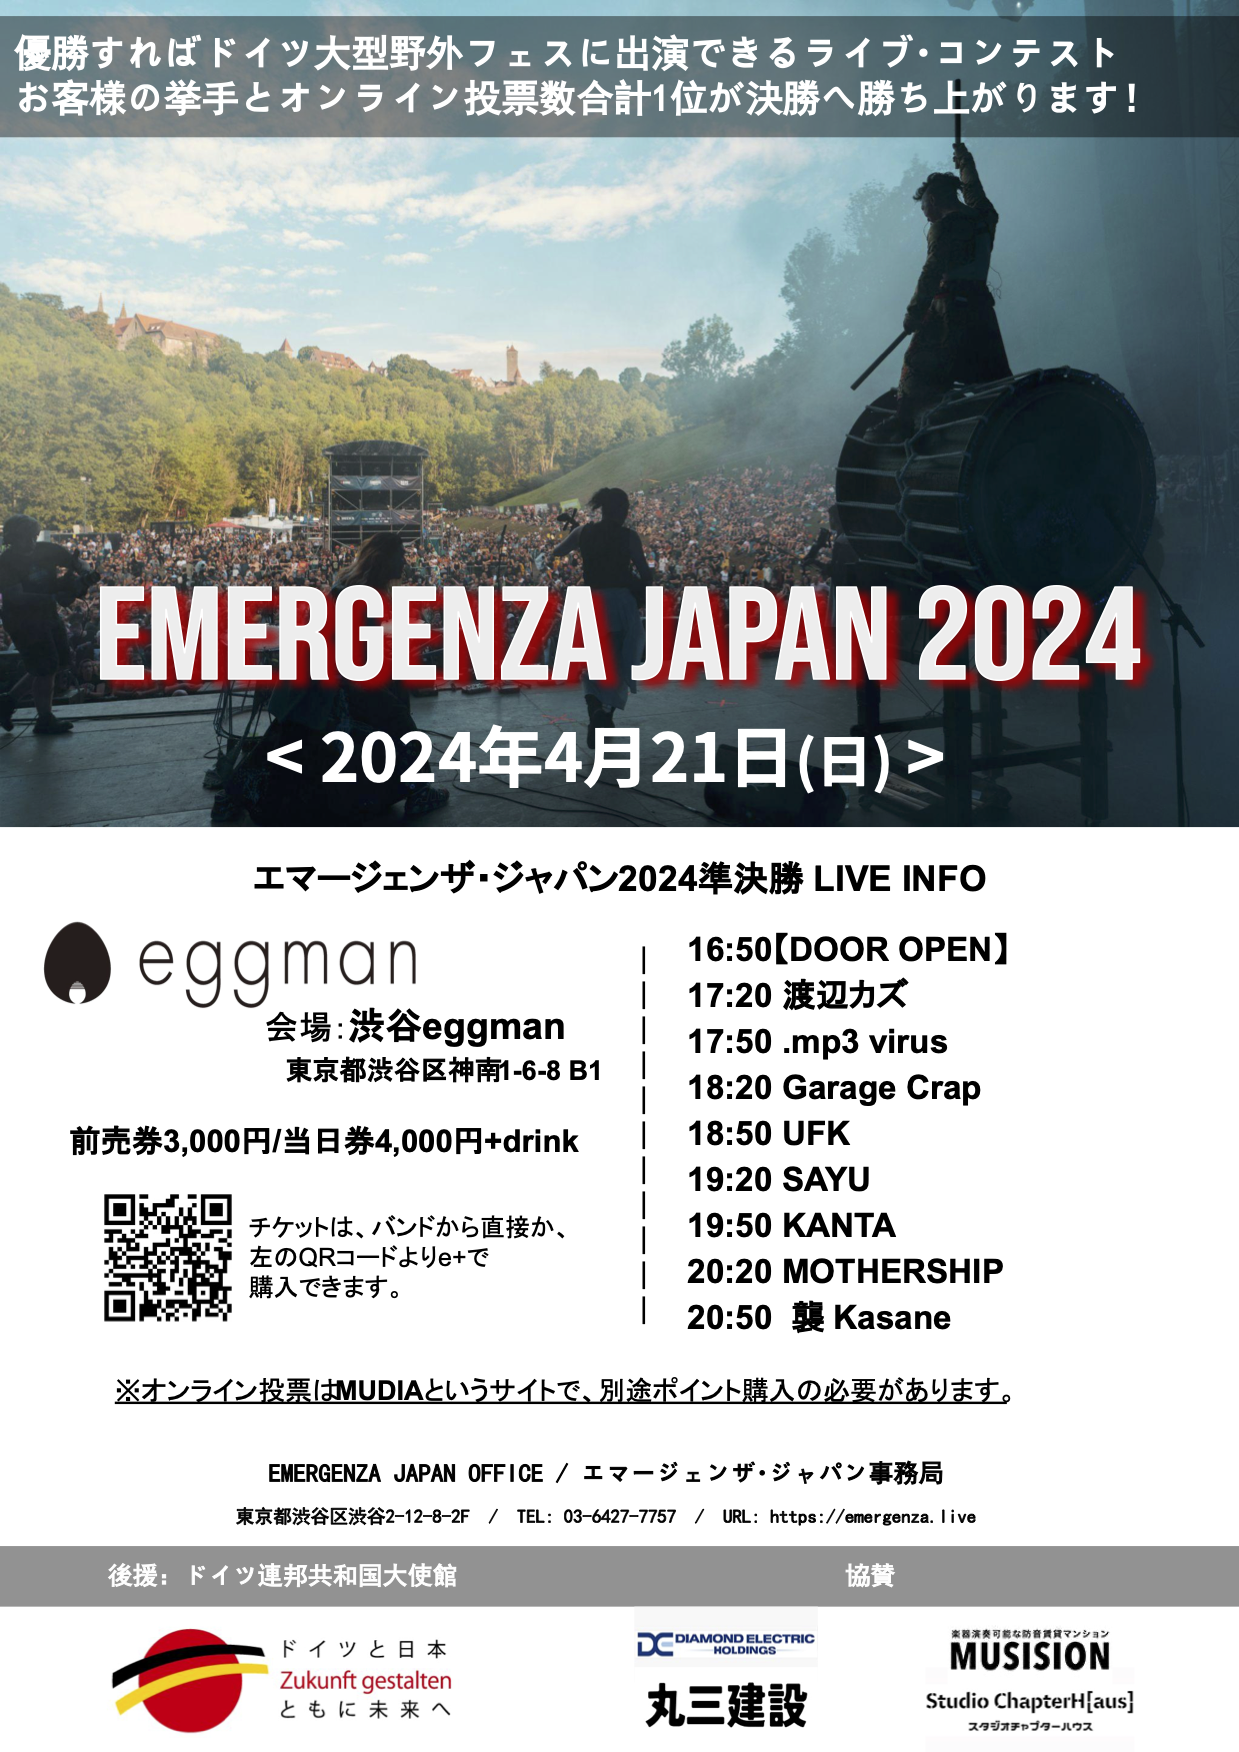 Emergenza Japan 2024 Semi-Final